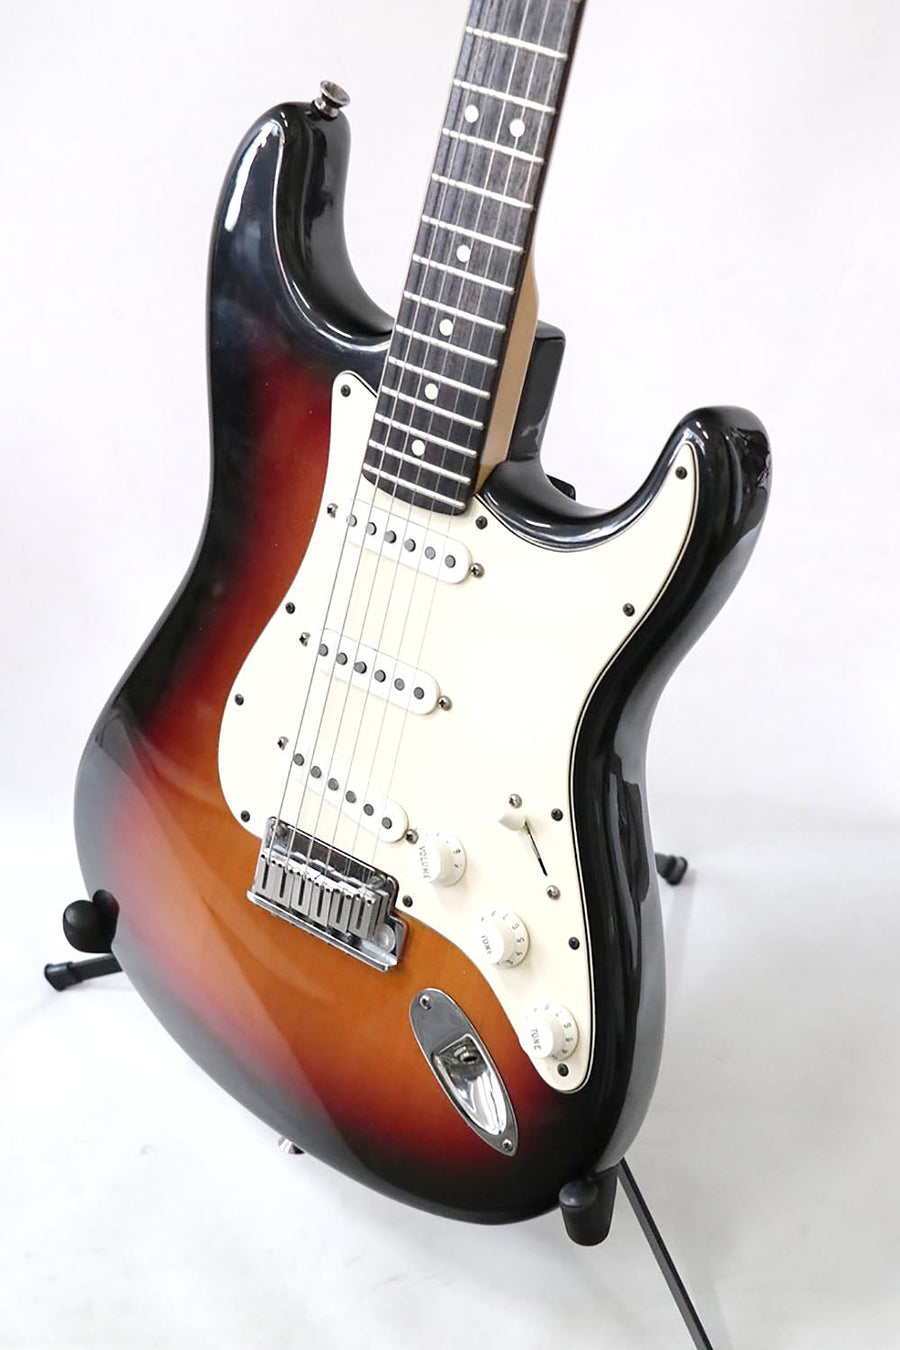 Fender Stratocaster 50th Anniversary USA 2004